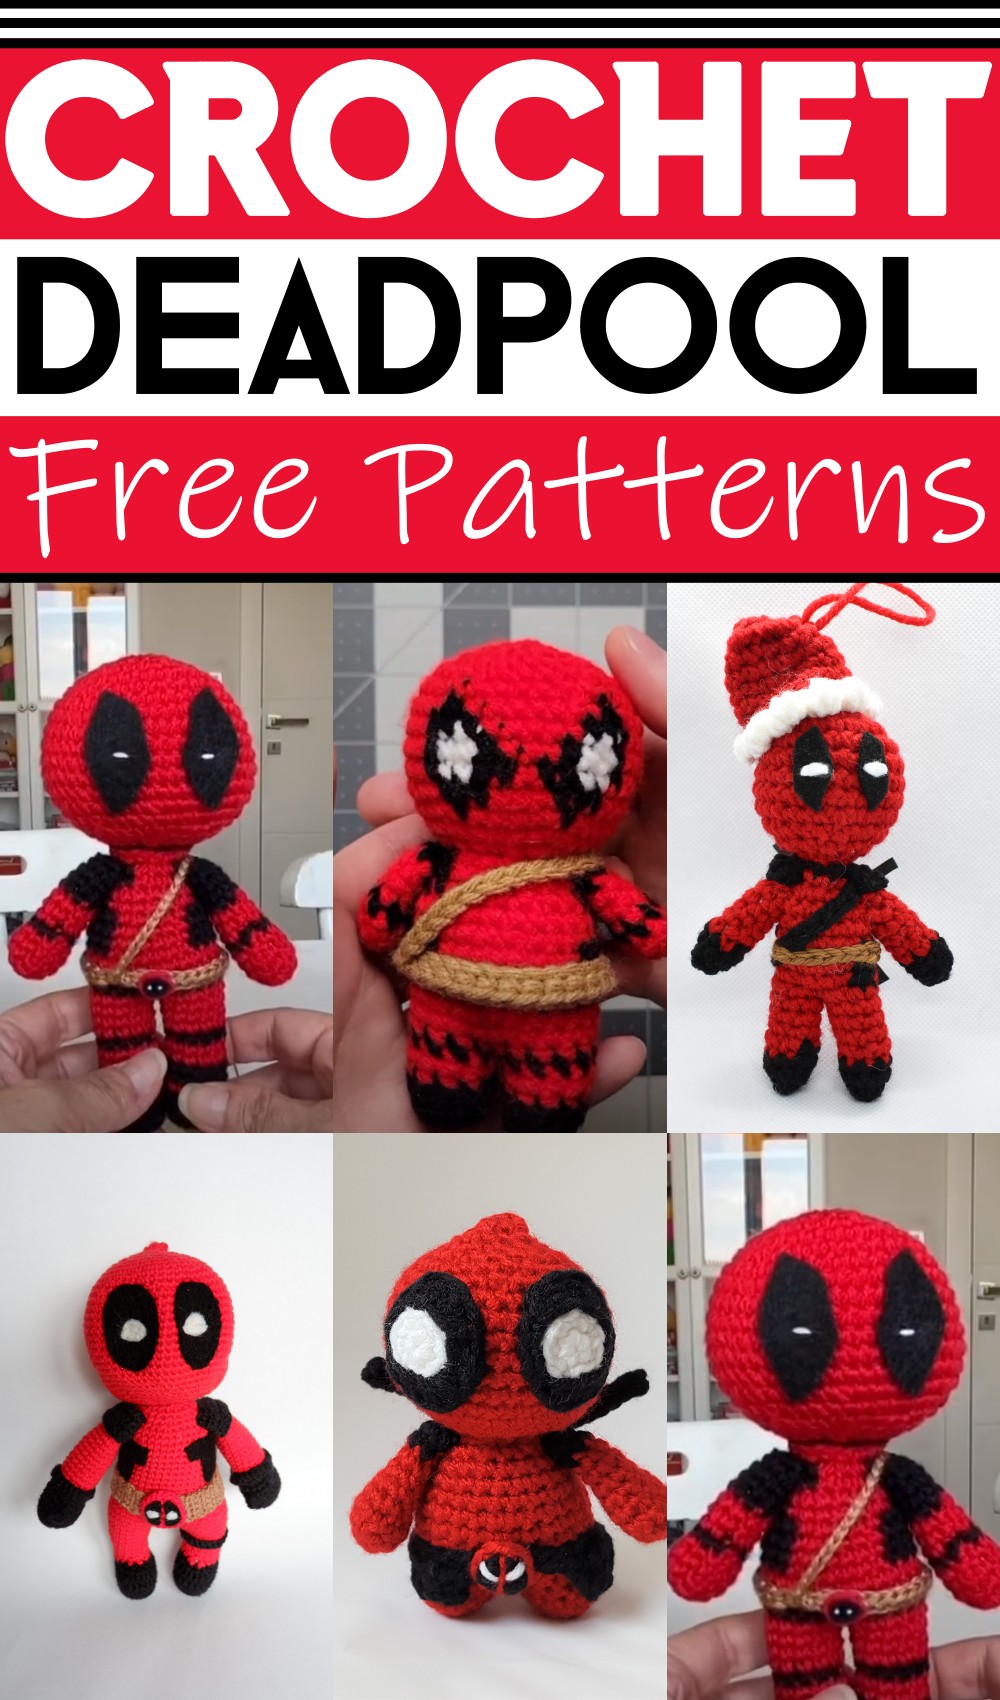 Crochet Deadpool Patterns